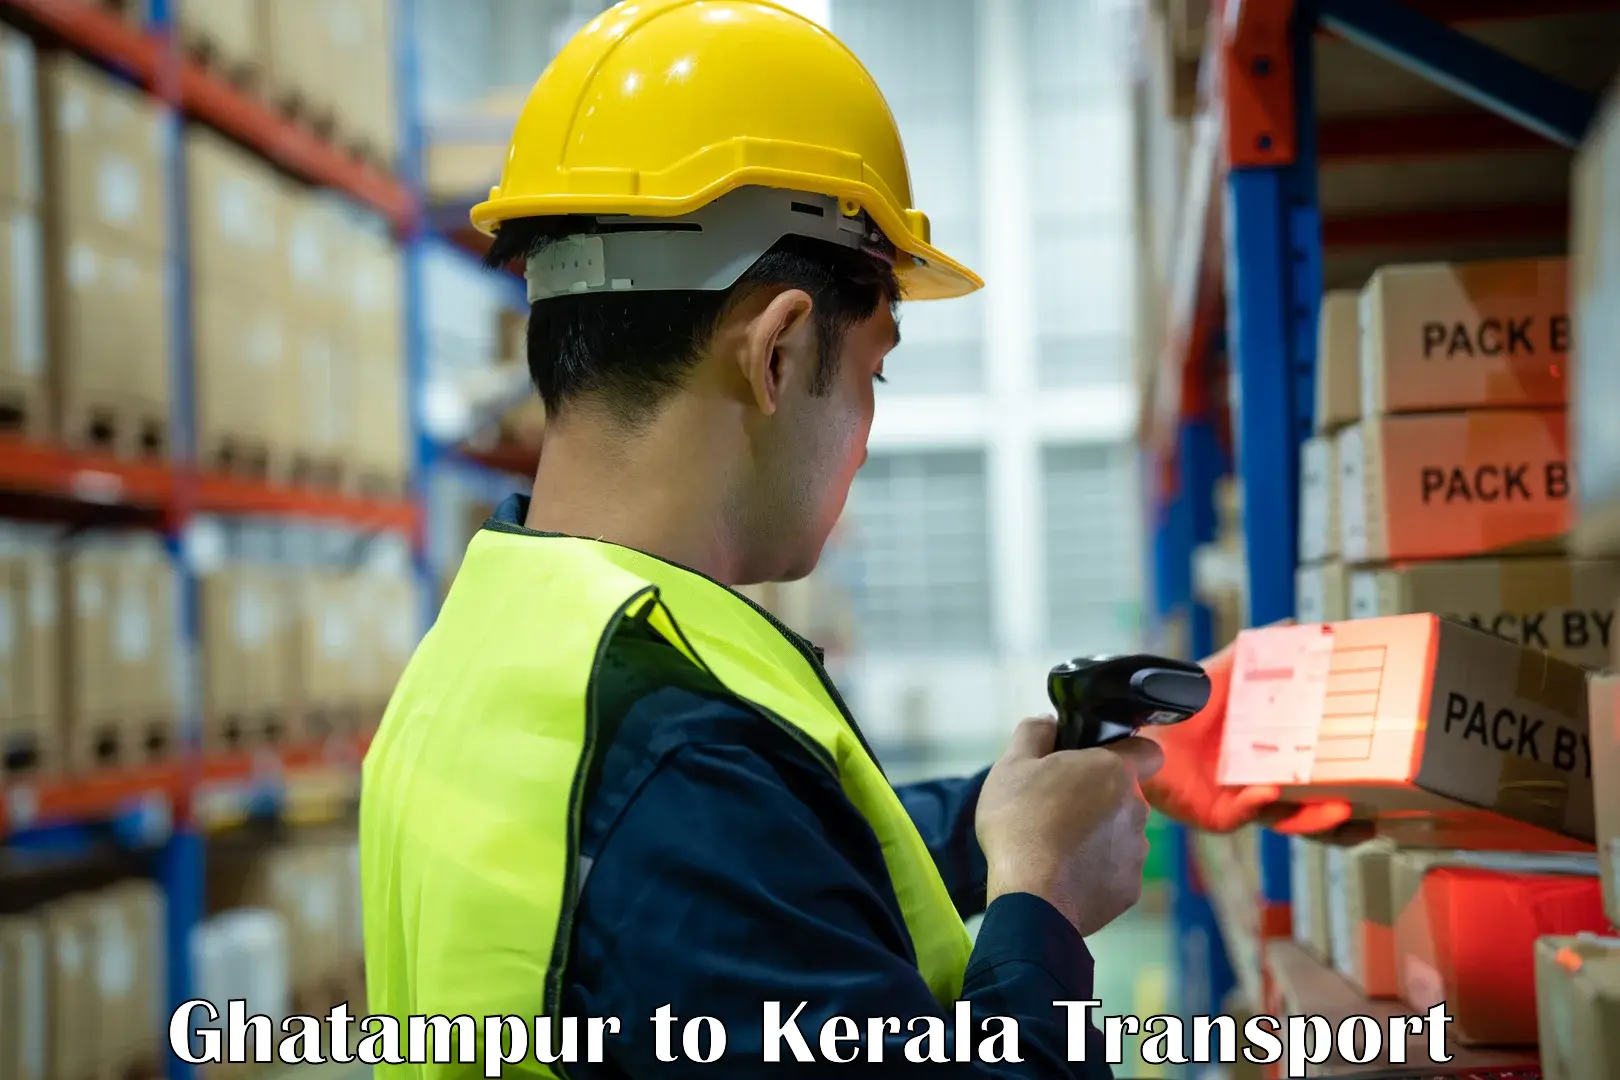 Shipping partner Ghatampur to Kerala